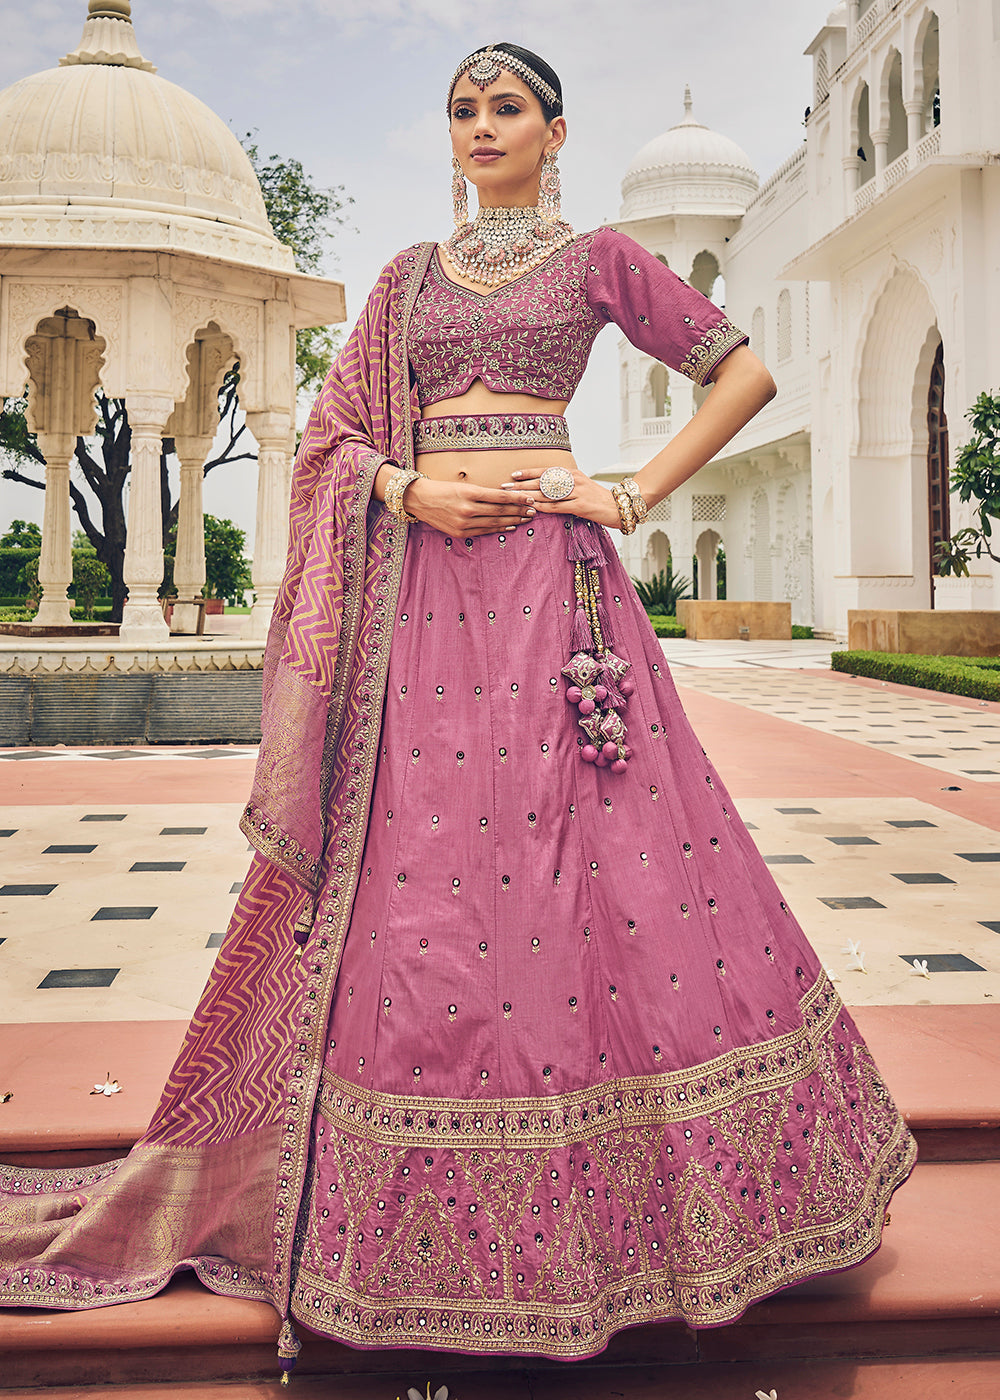 Buy Now Dusty Pink Viscose Silk Traditional Bridal Lehenga Choli Online in USA, UK, Canada & Worldwide at Empress Clothing.